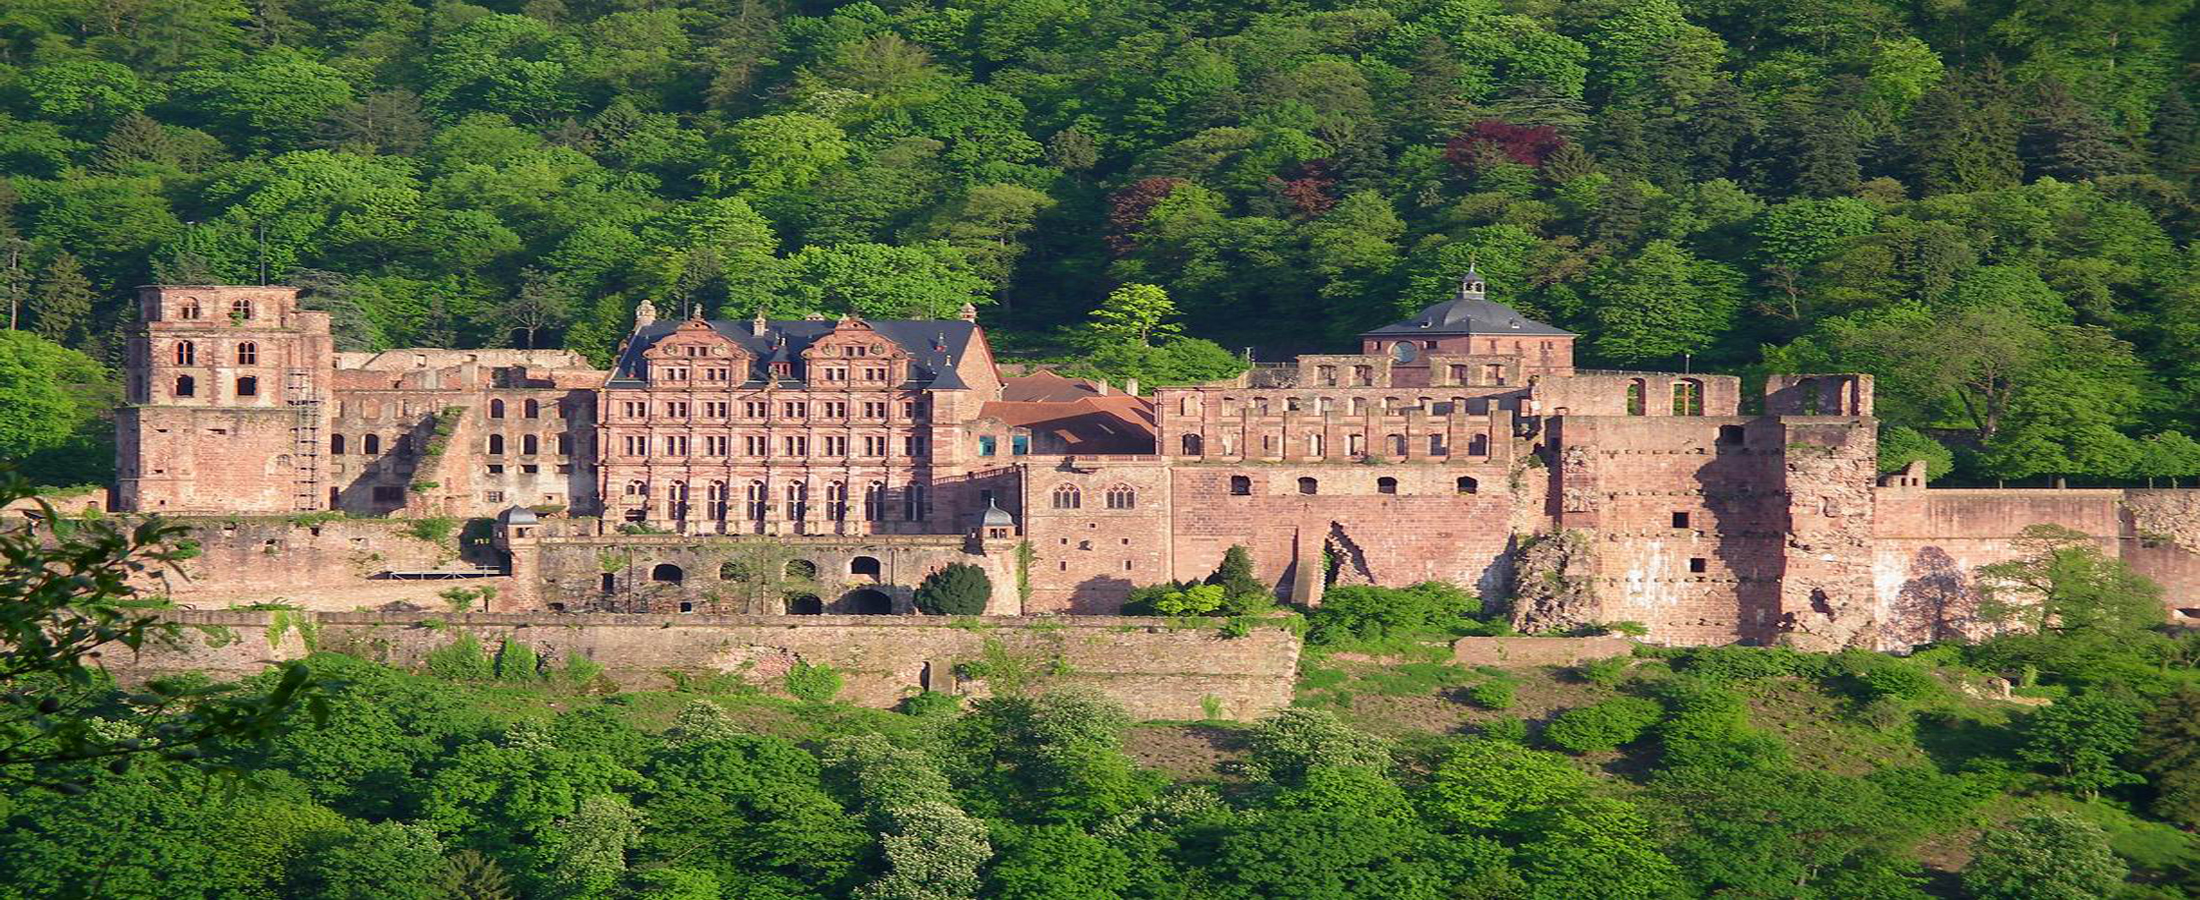 Heidelberg Castle #10